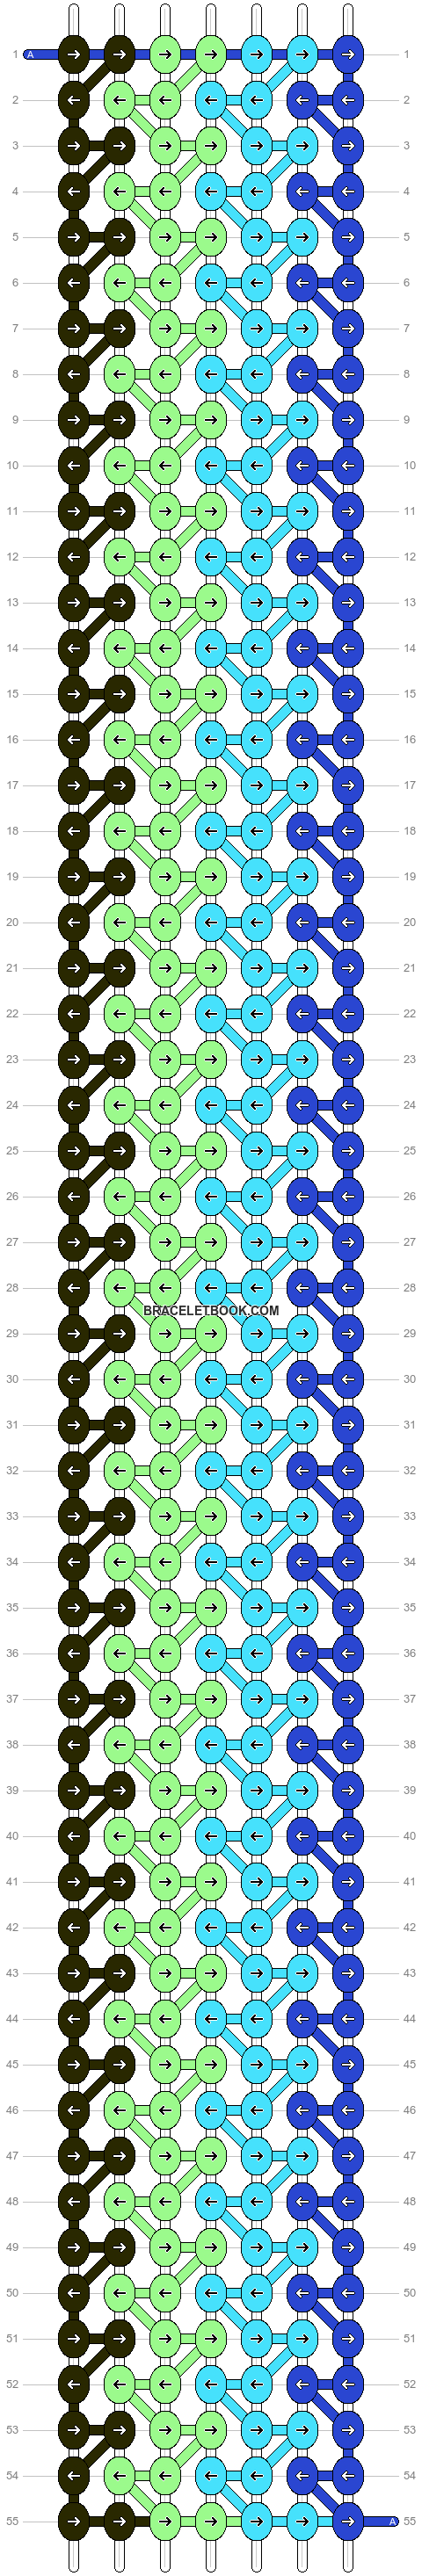 Alpha pattern #15230 variation #332511 pattern